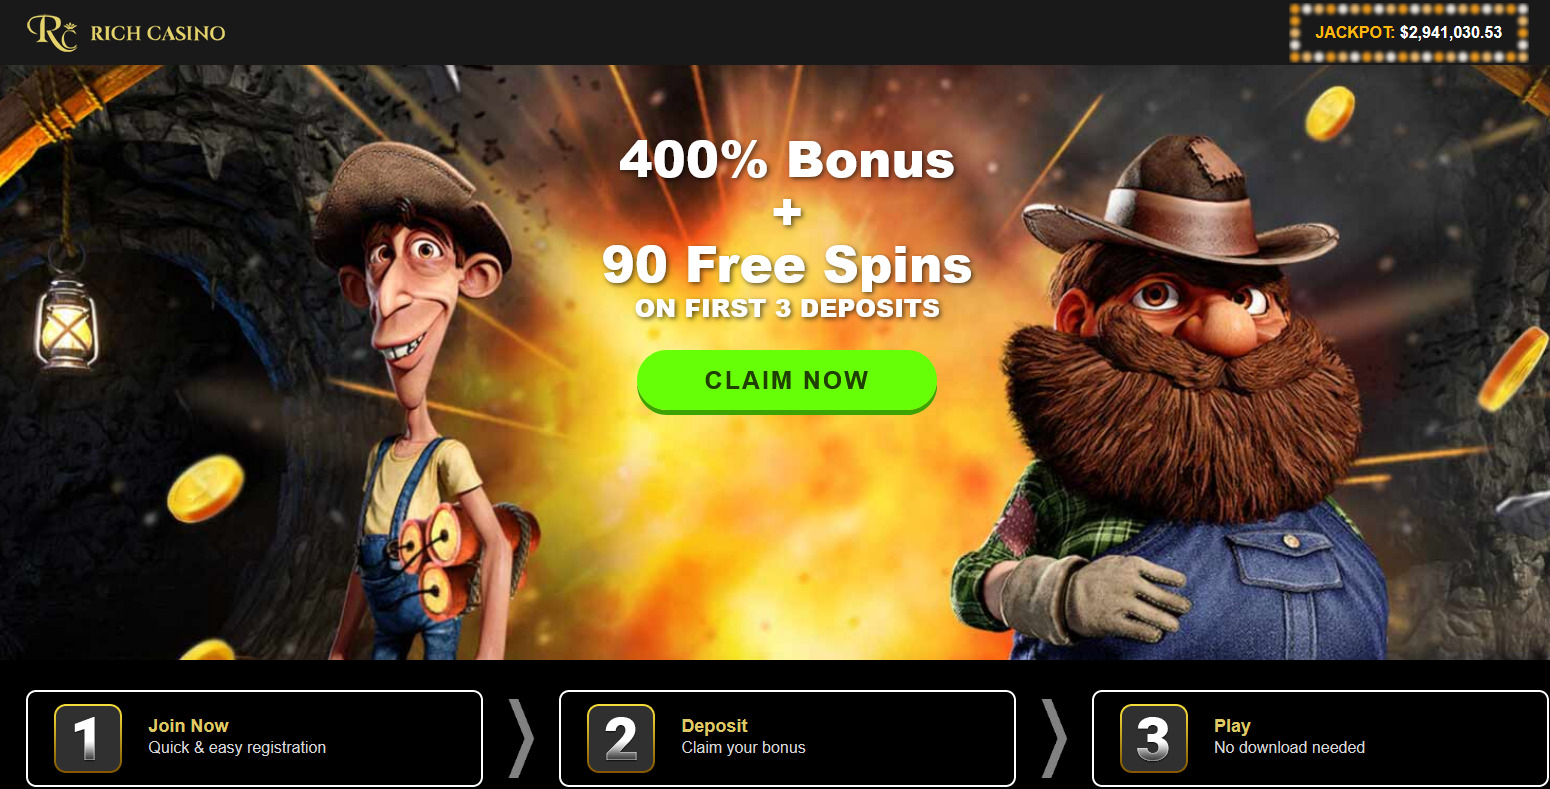 400% Bonus + 90 Free Spins ON FIRST 3 DEPOSITS